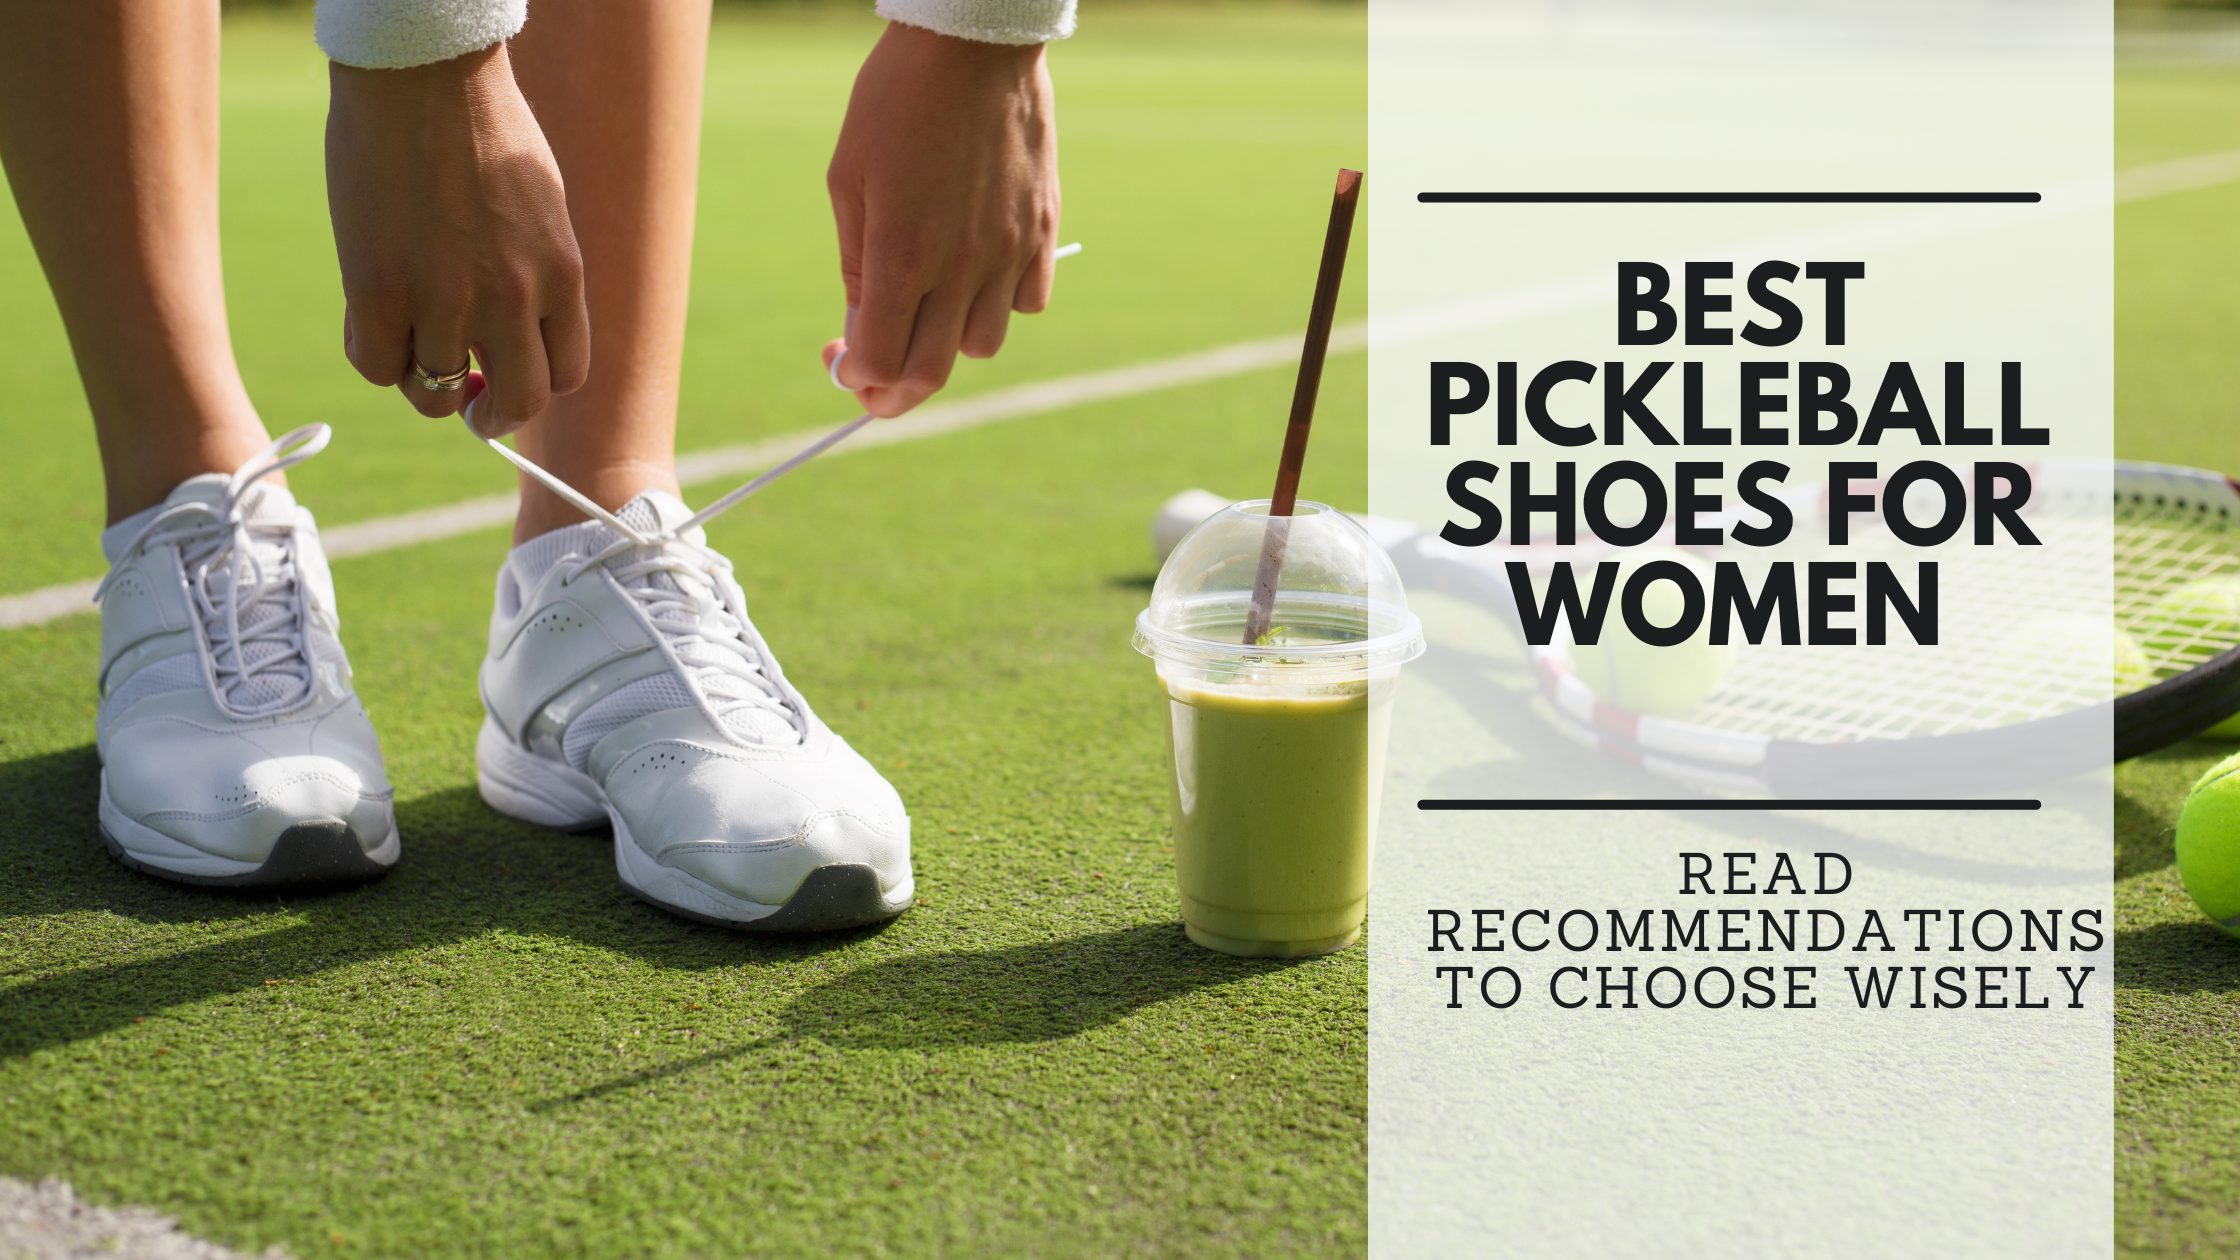 5 Best Pickleball Shoes For Women – Expert’s Recommendation